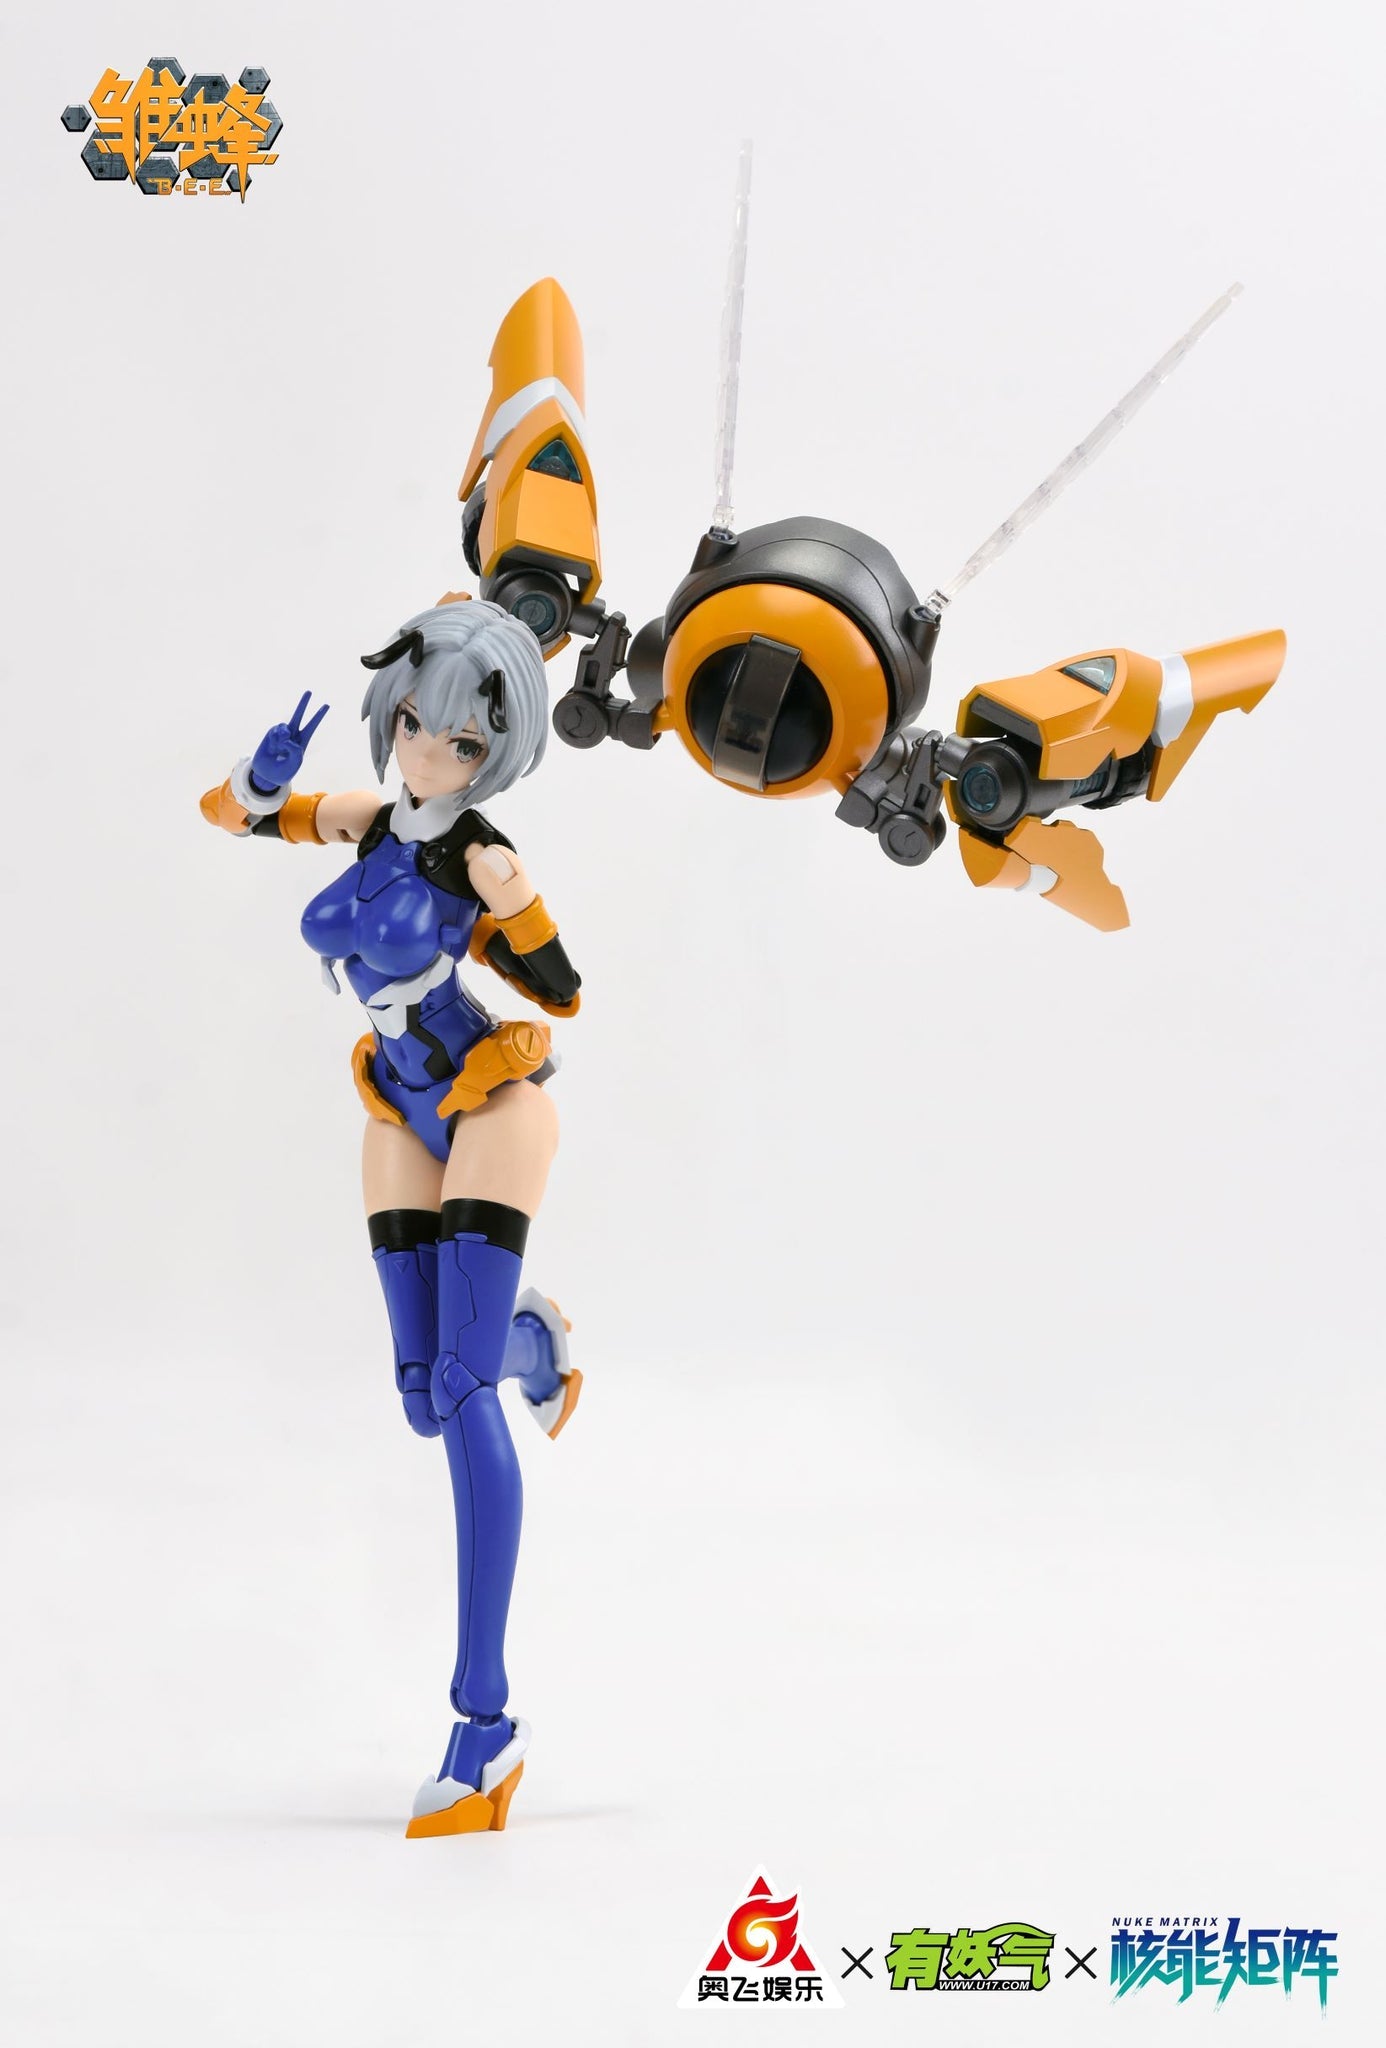 NUKE MATRIX "Cyber Forest Fantasy Girls" Assault Angel Bee Model Kit - Glacier Hobbies - NUKE MATRIX